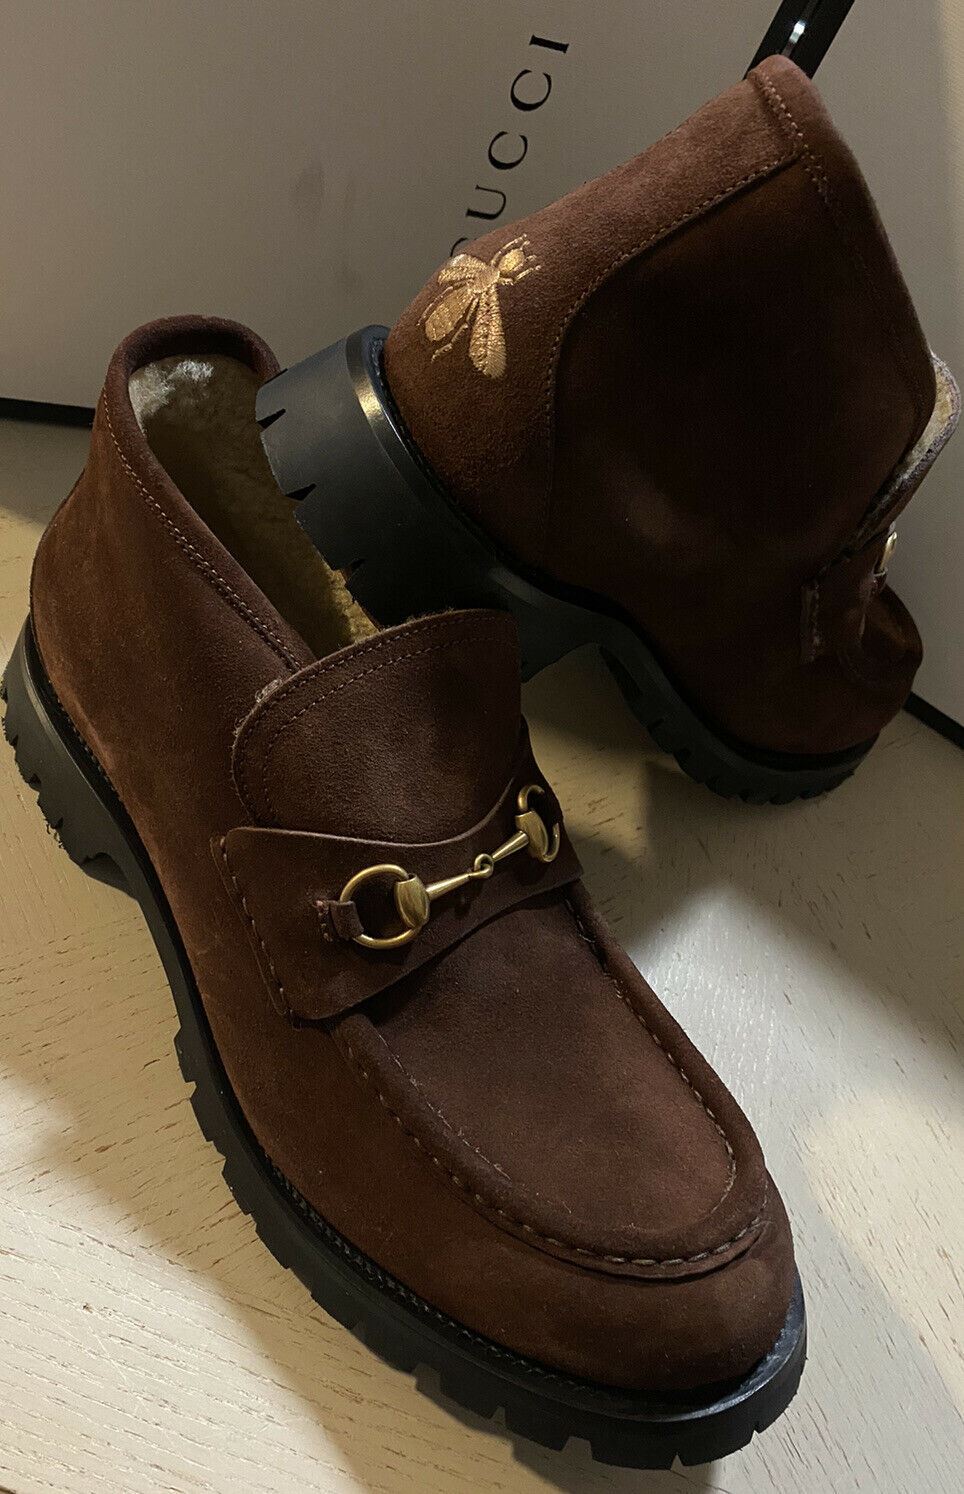 NIB $1400 Gucci Men’s Suede Ankle Boots Shoes DK Brown 15 US / 14 UK 575126